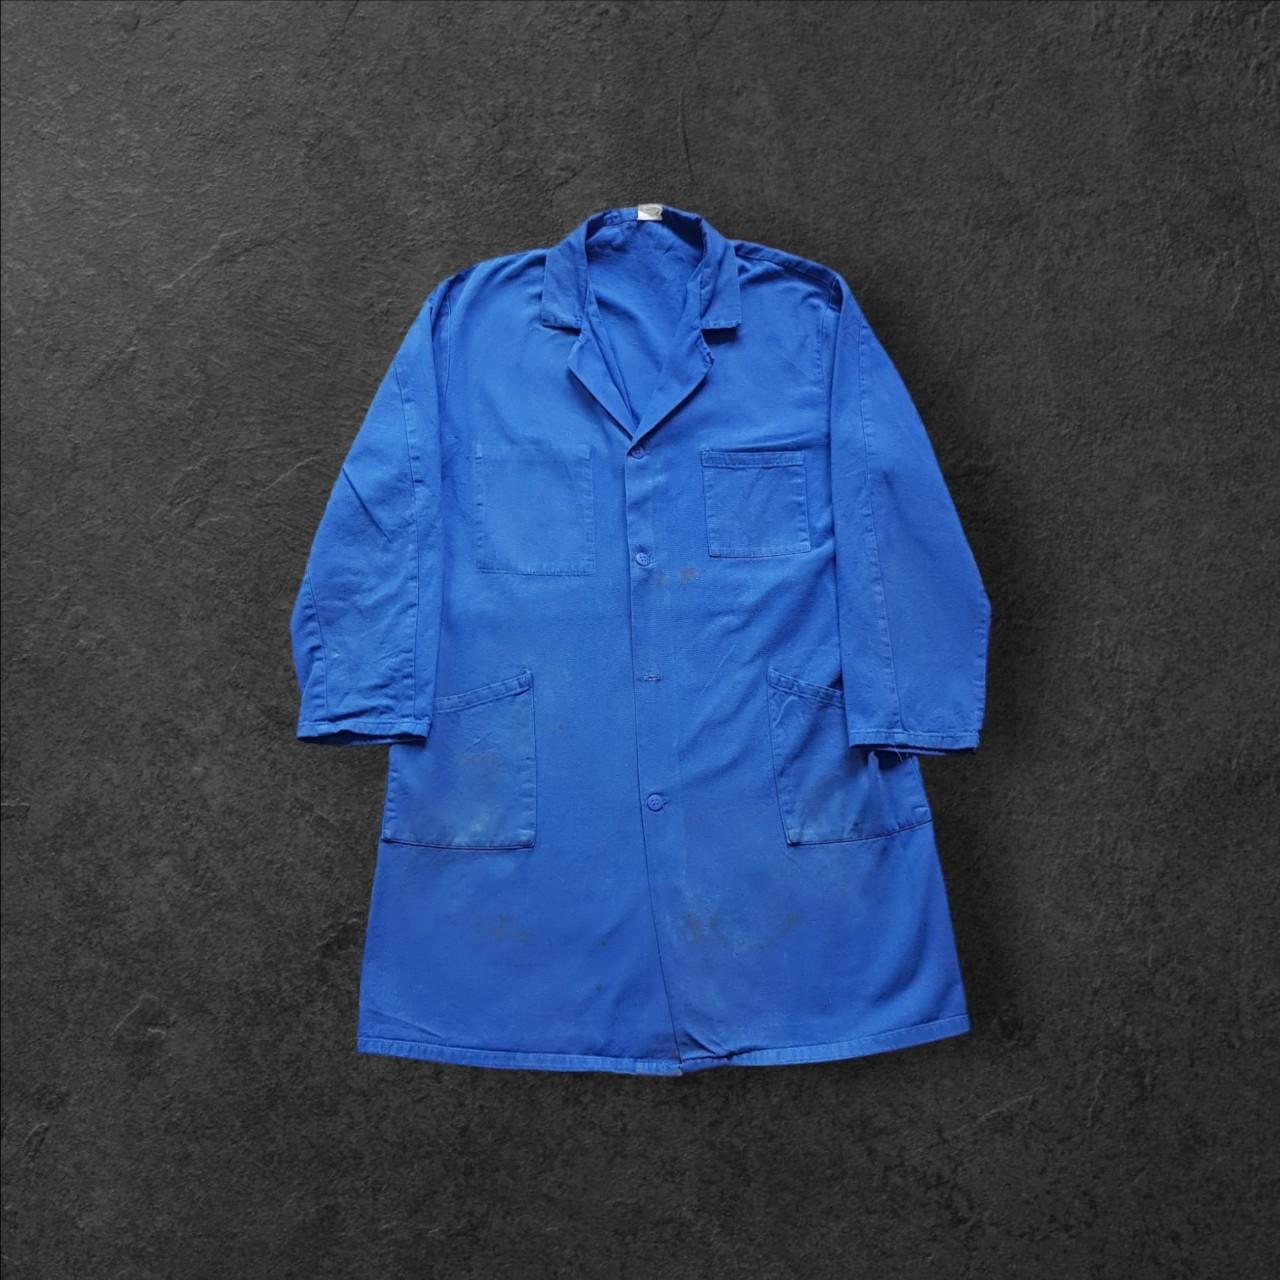 Vintage royal blue french chore long work coat